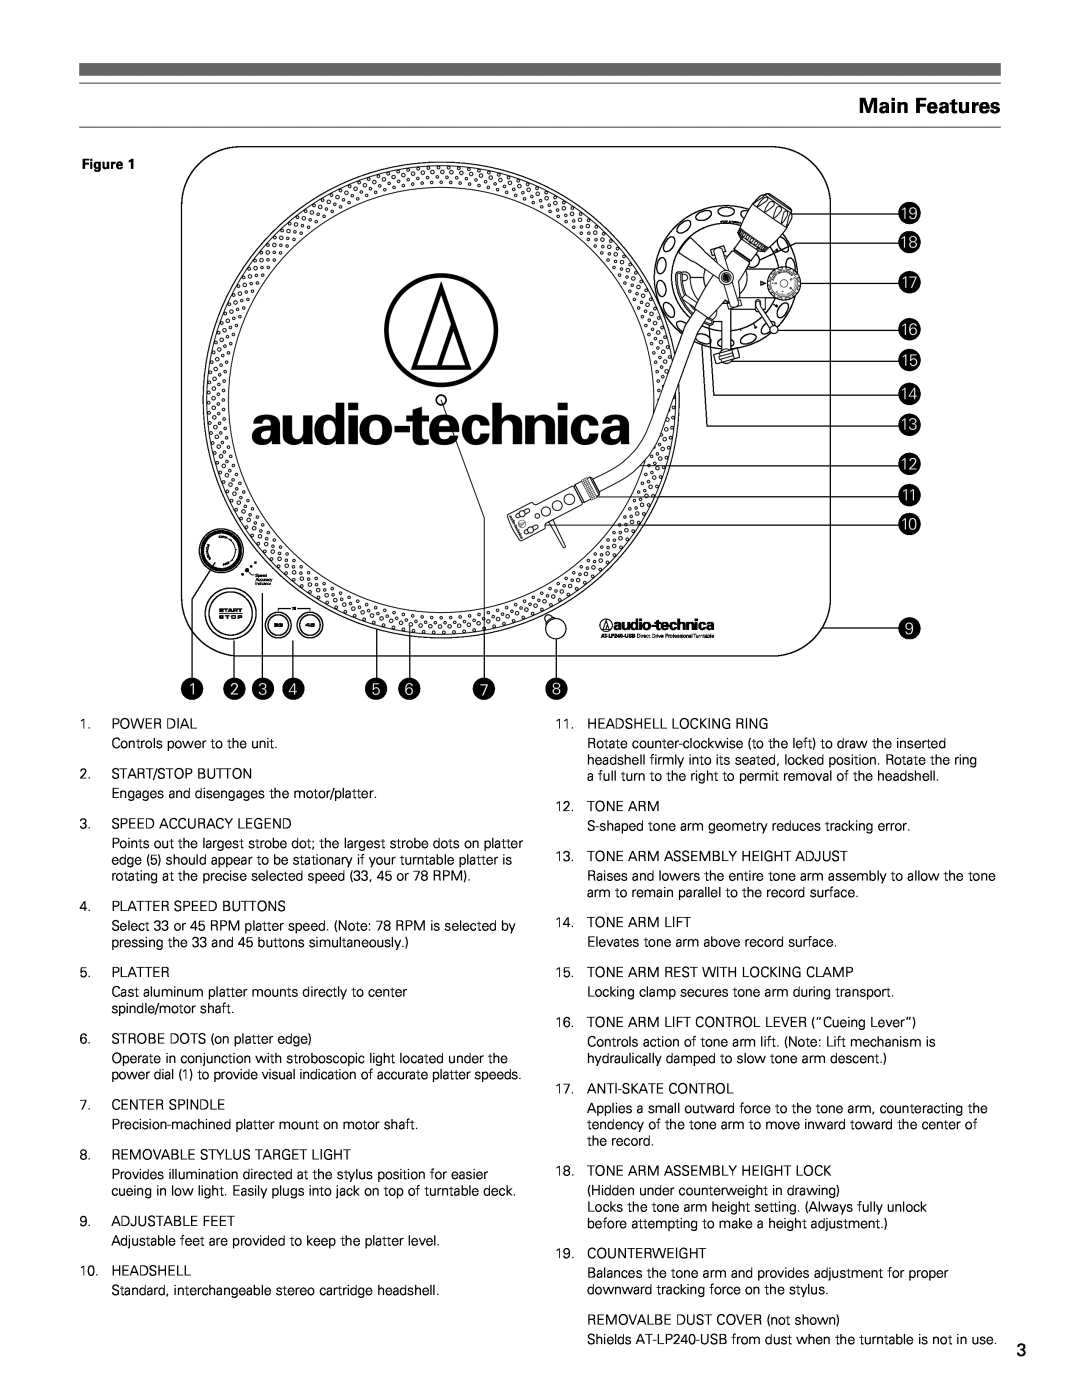 Audio-Technica AT-LP240 manual Main Features, 19 18 17 16 15 14 13 12 11 10 